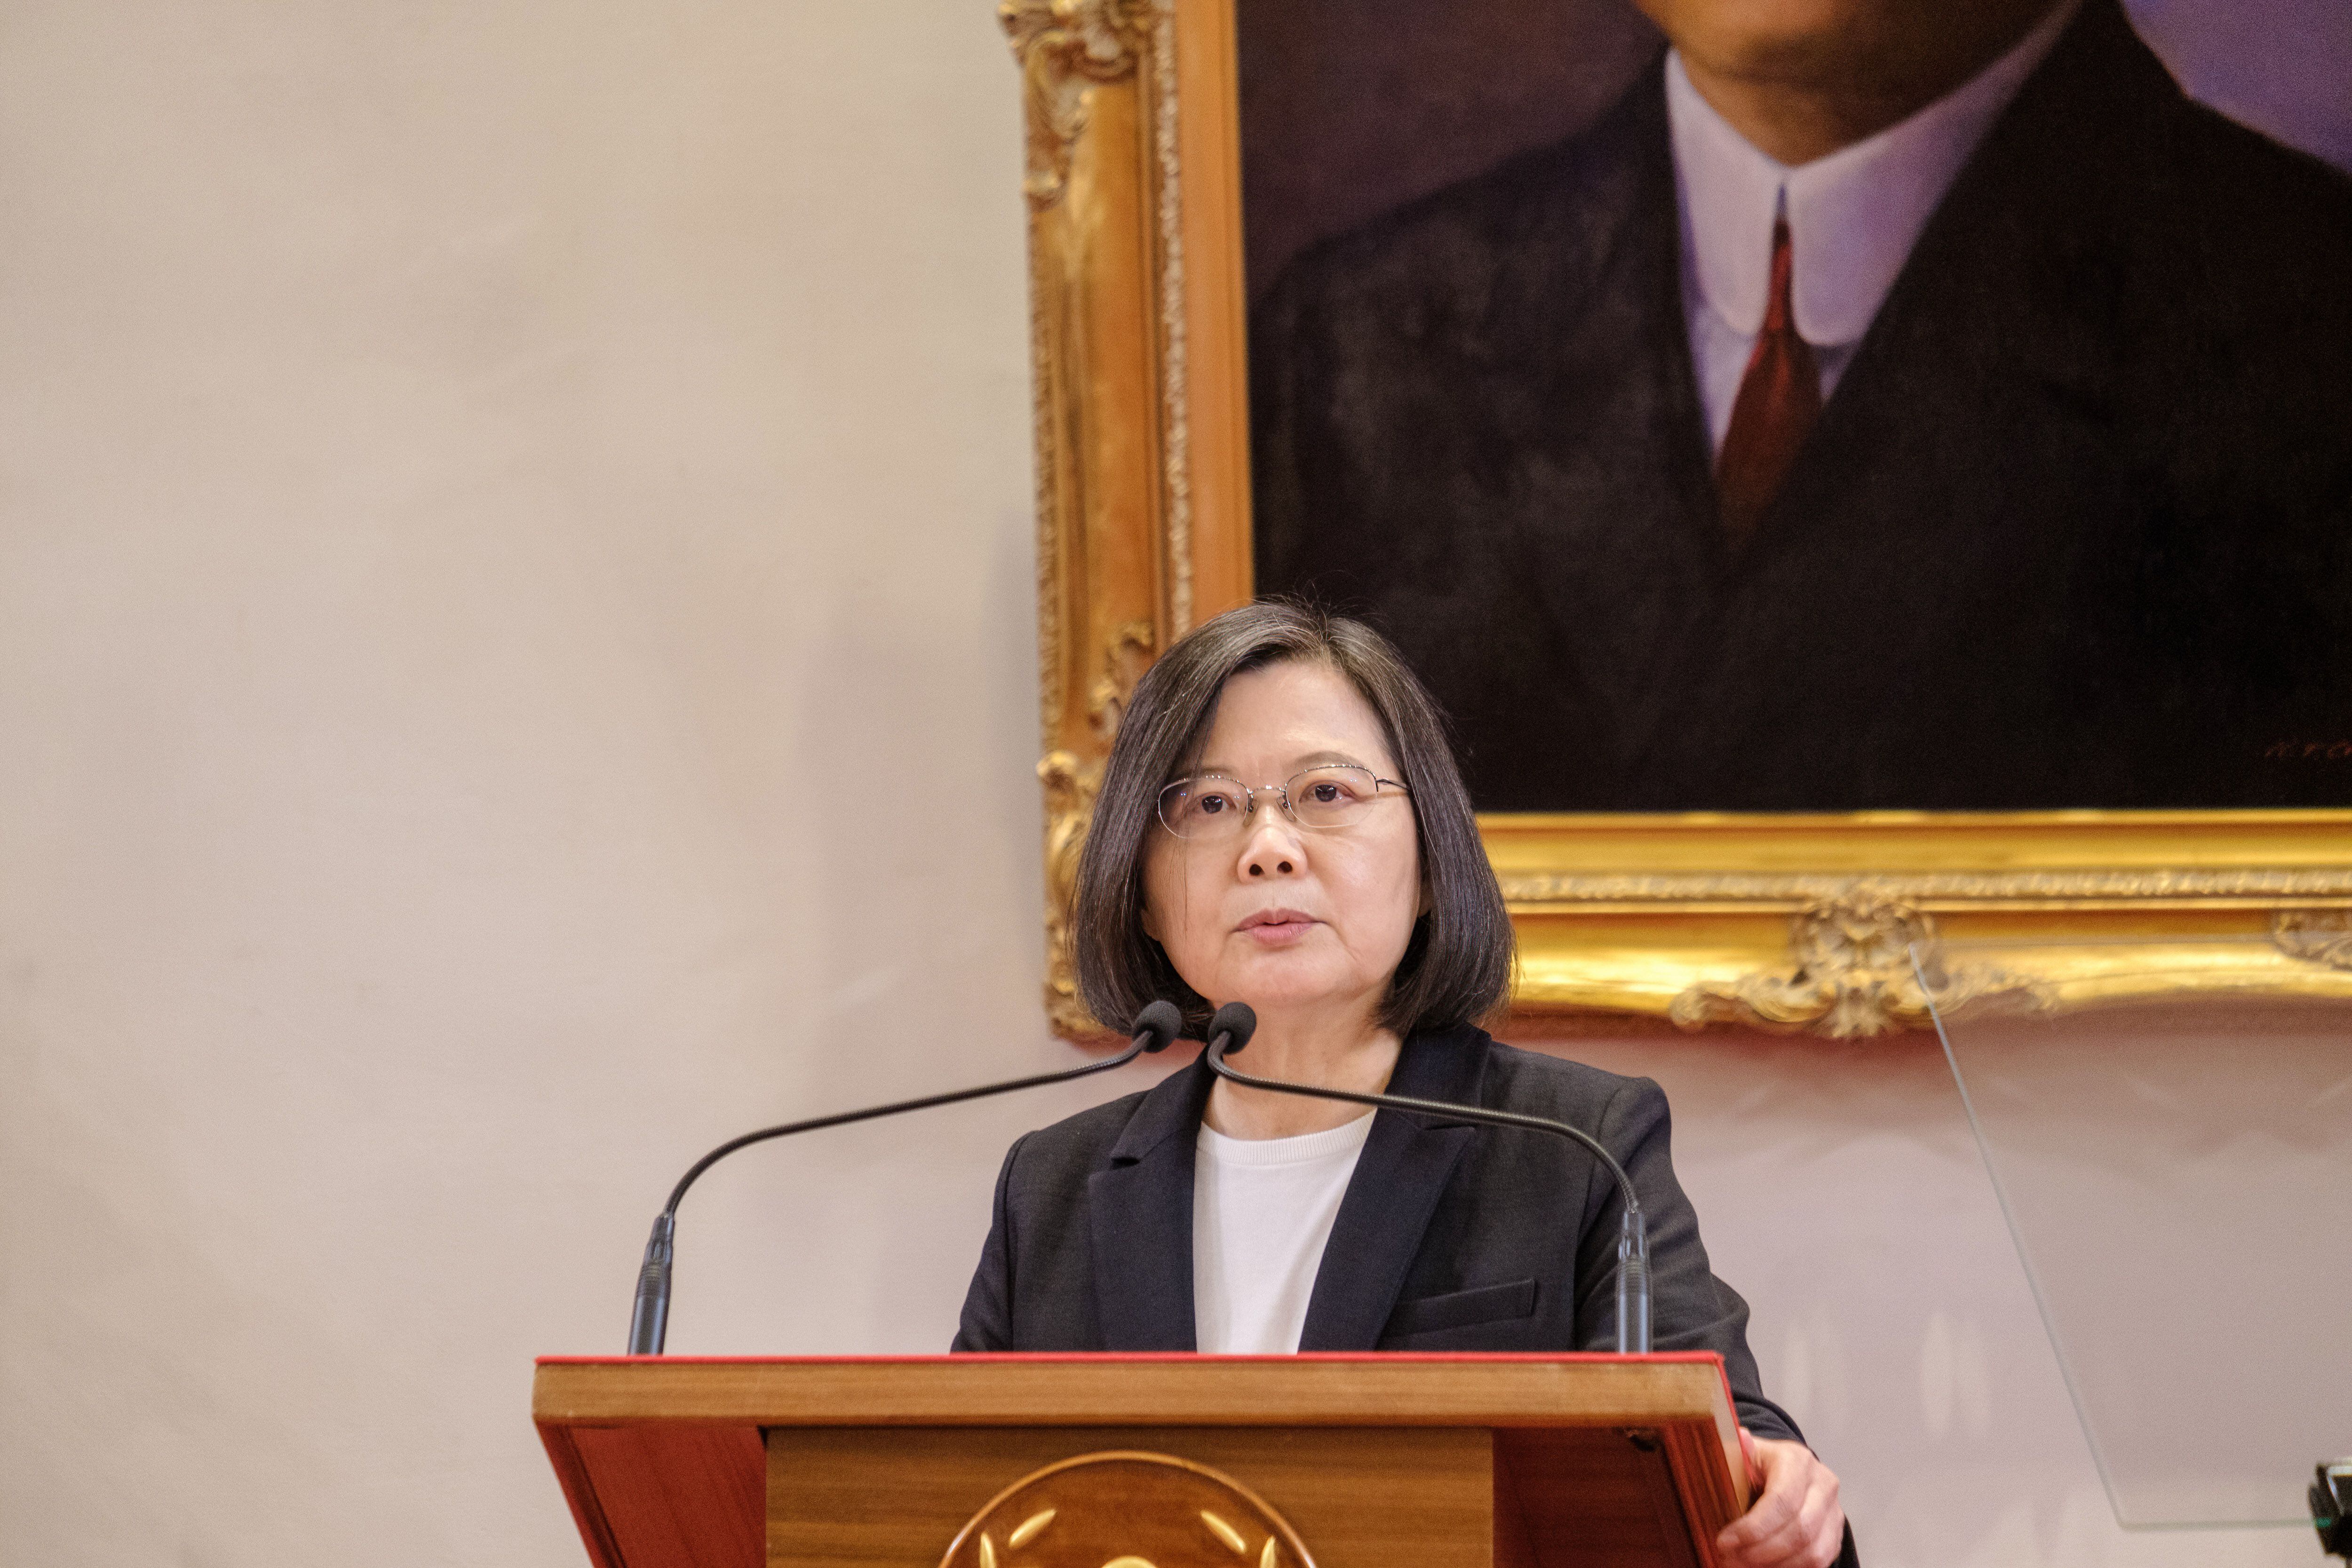 La presidenta de Taiwán, Tsai Ing-wen, expresó su esperanza de que Taipei y Beijing busquen una “coexistencia pacífica a largo plazo”. (Europa Press)